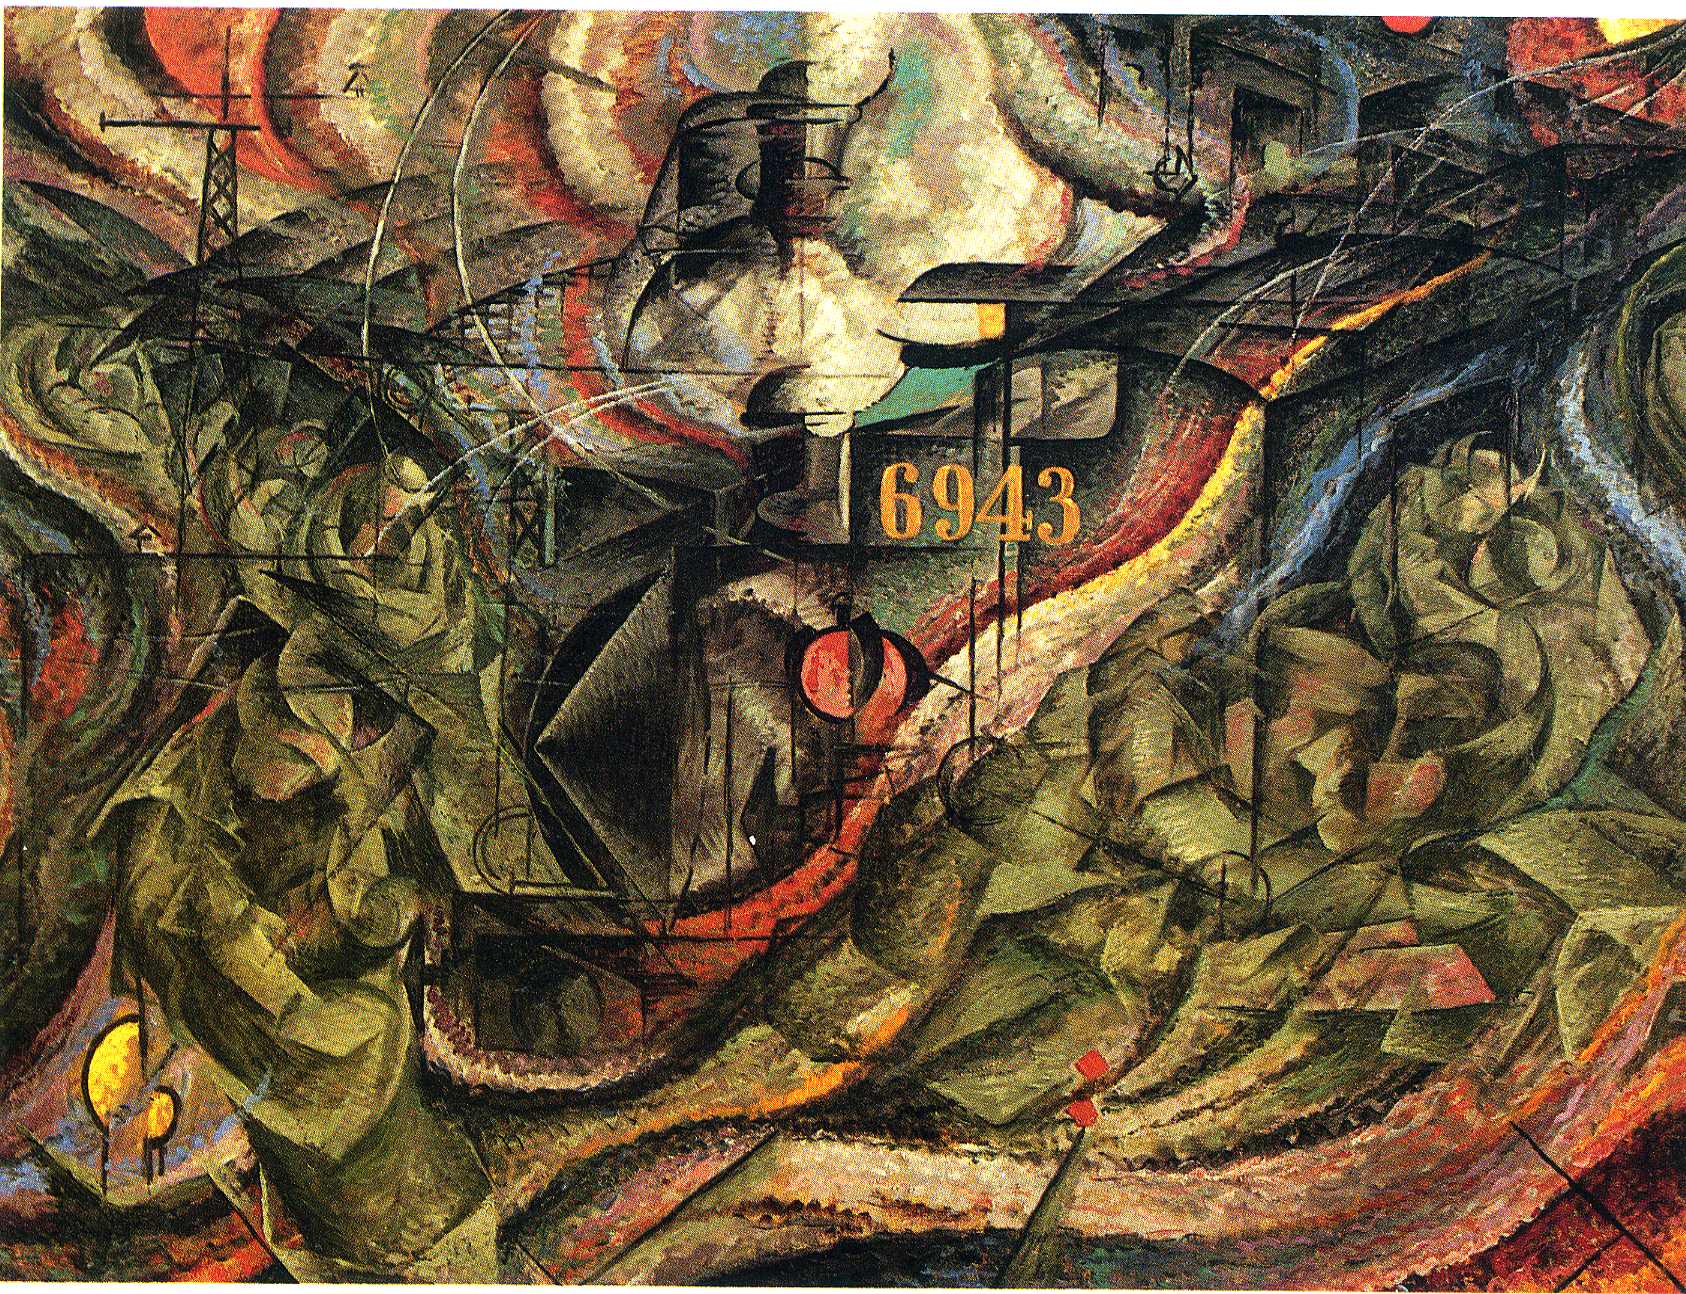 我的心境: 告別 by Umberto Boccioni - 1911 - 70.5 x 96.2 公分 